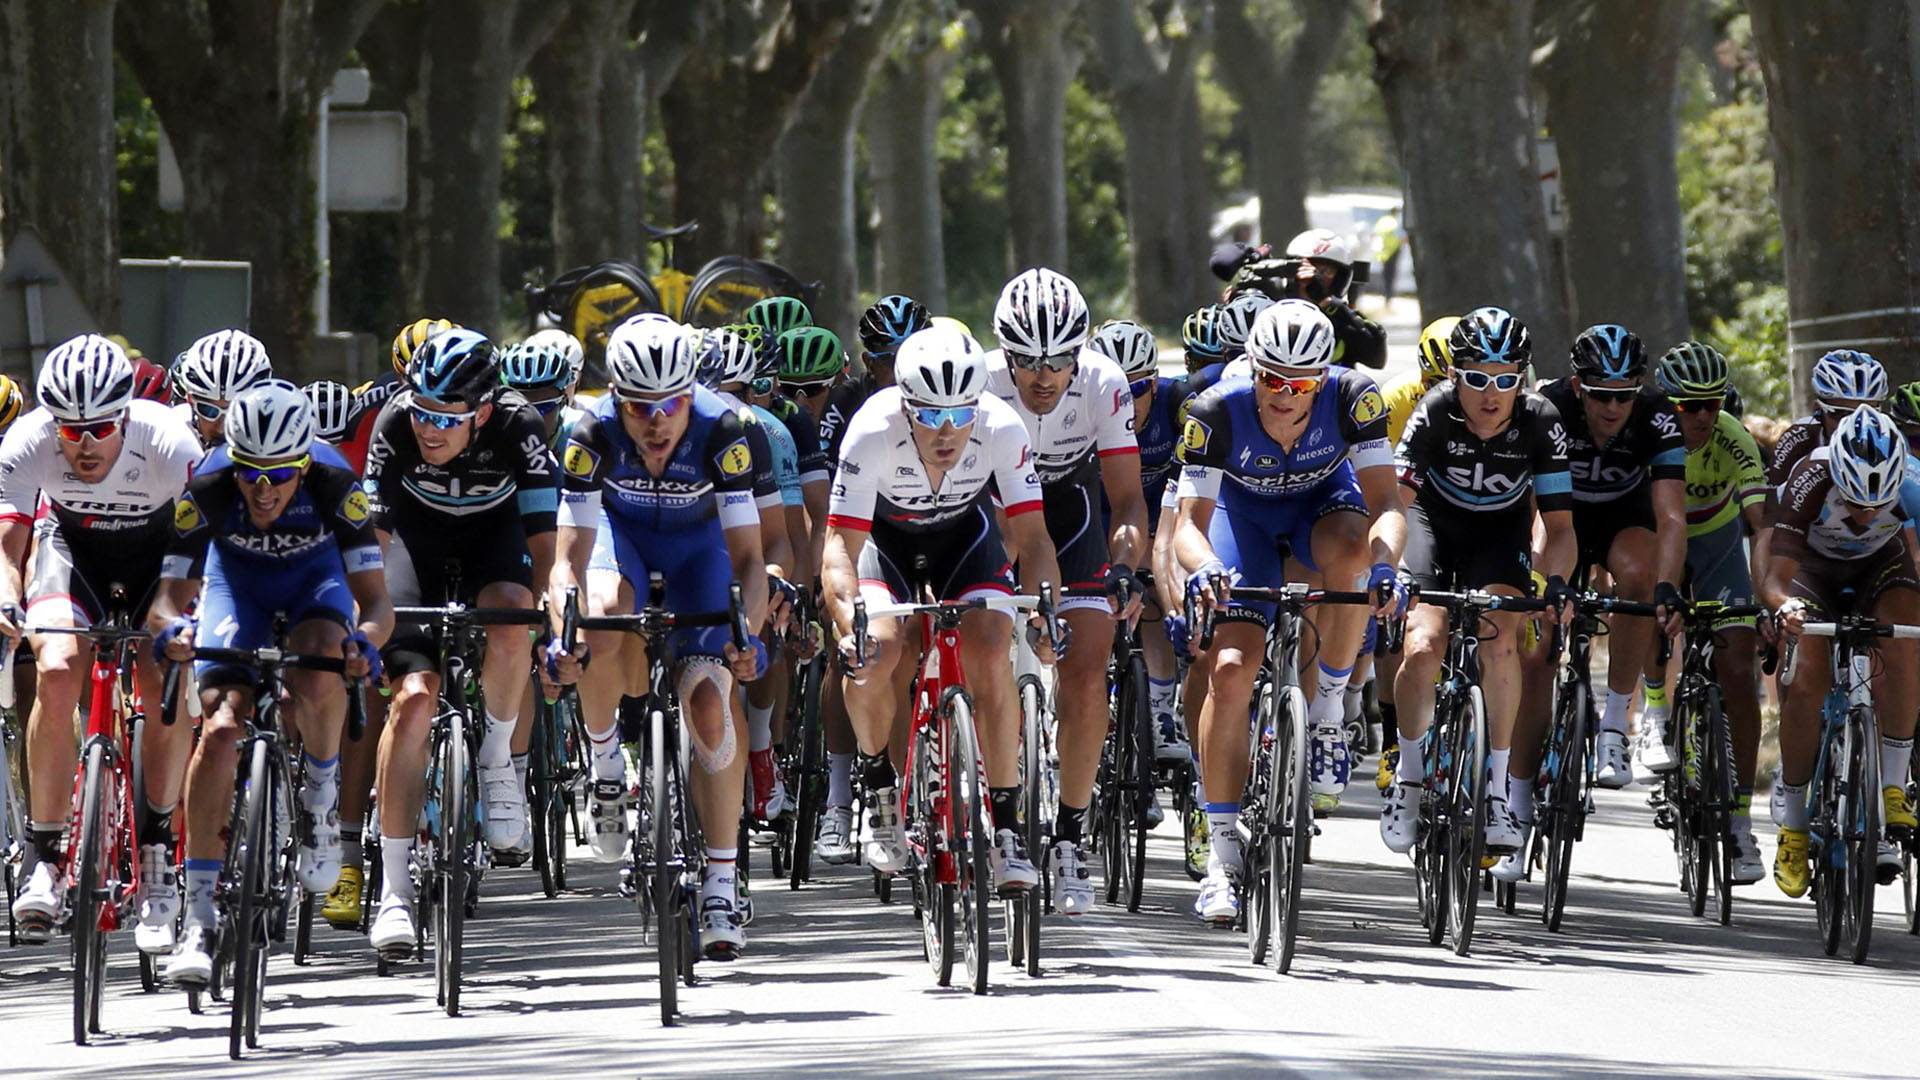 Refuerzan seguridad en Tour de Francia